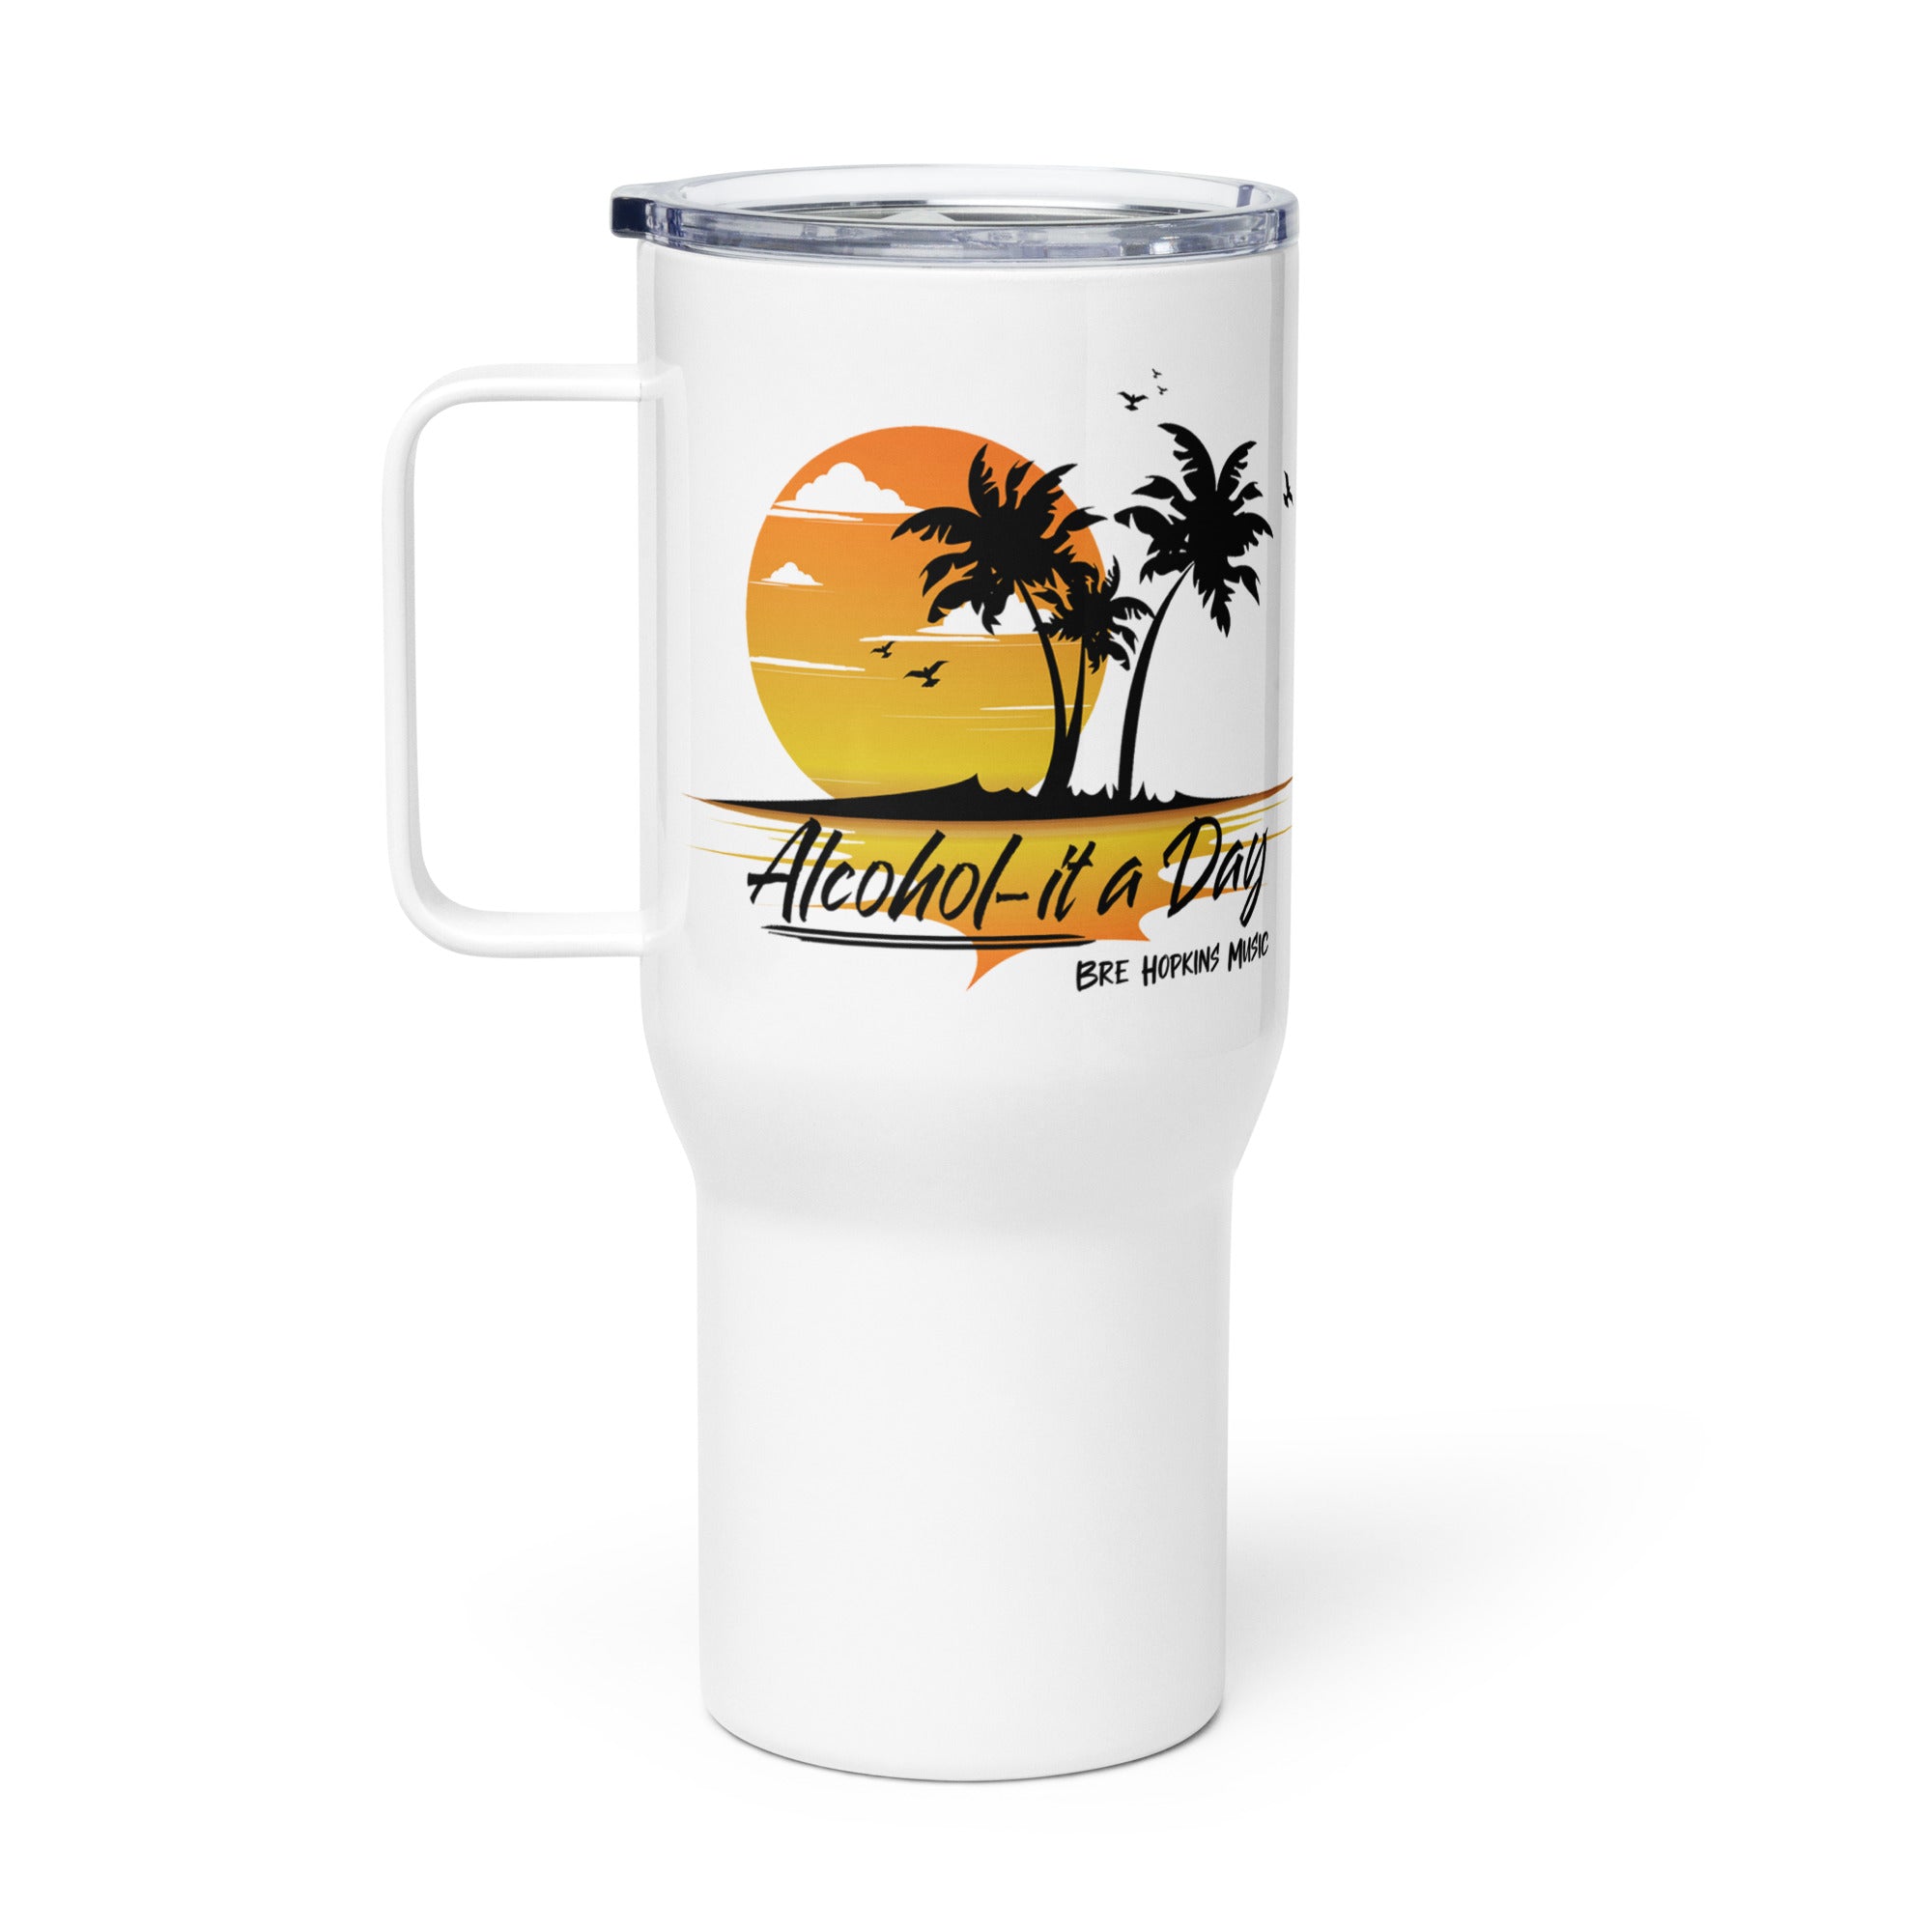 Bre Hopkins - Travel mug with a handle